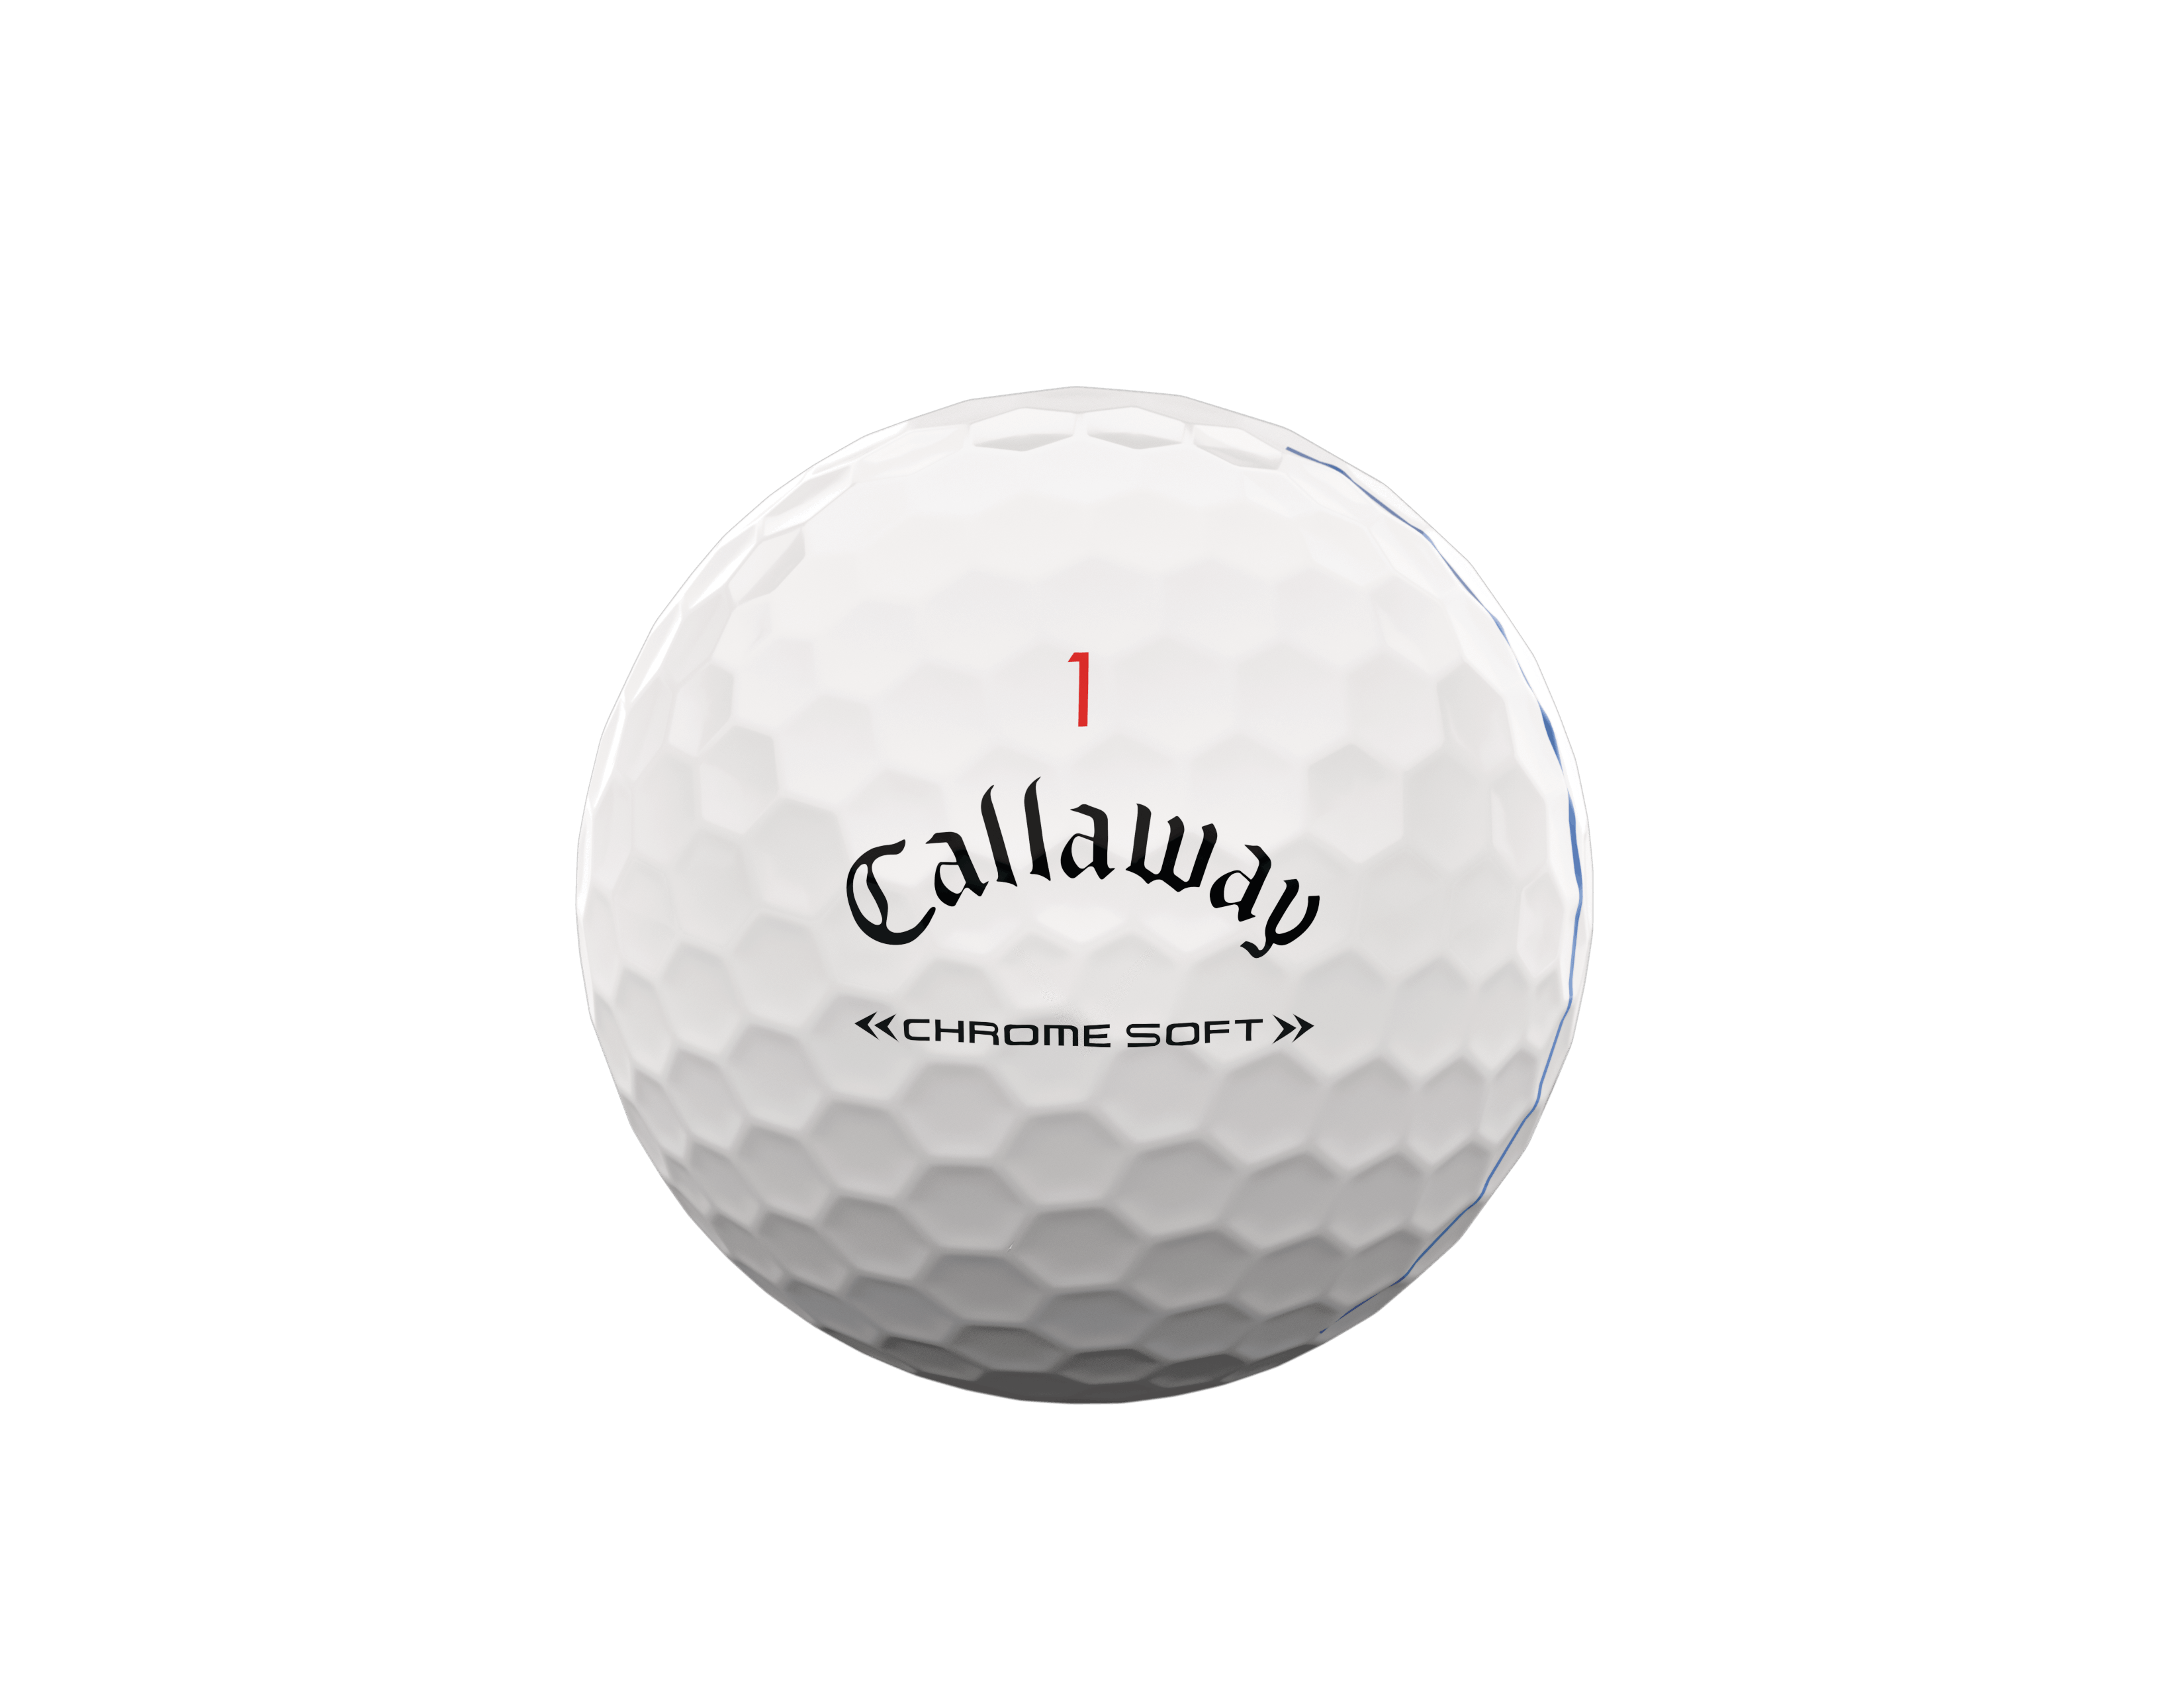 Callaway 2022 Chrome Soft Triple Track Golf Balls · White